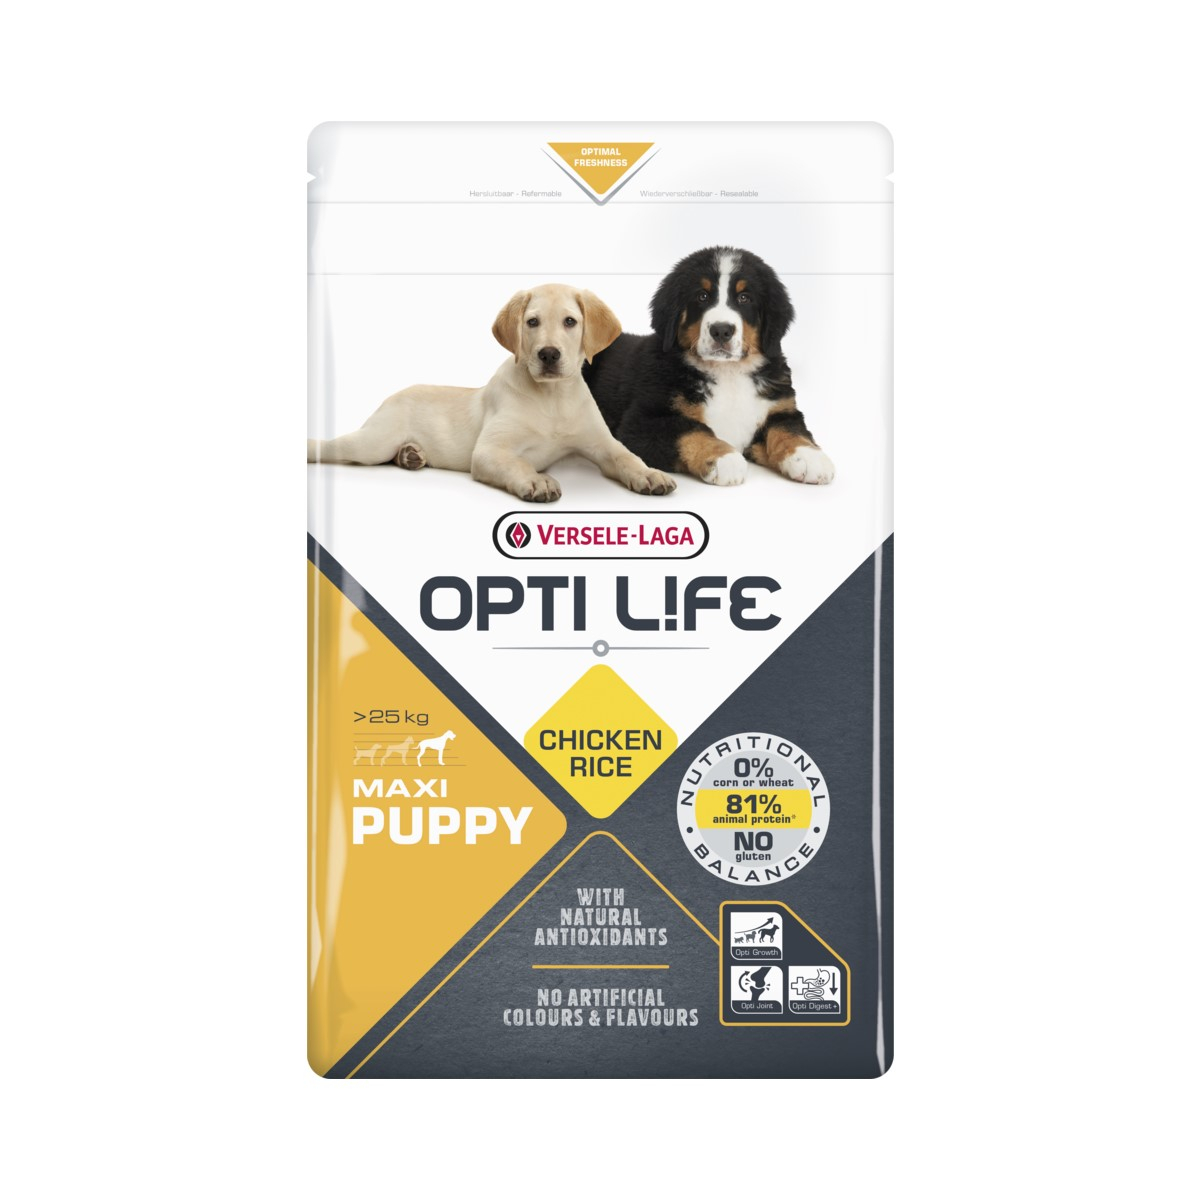 OPTI LIFE Puppy Maxi